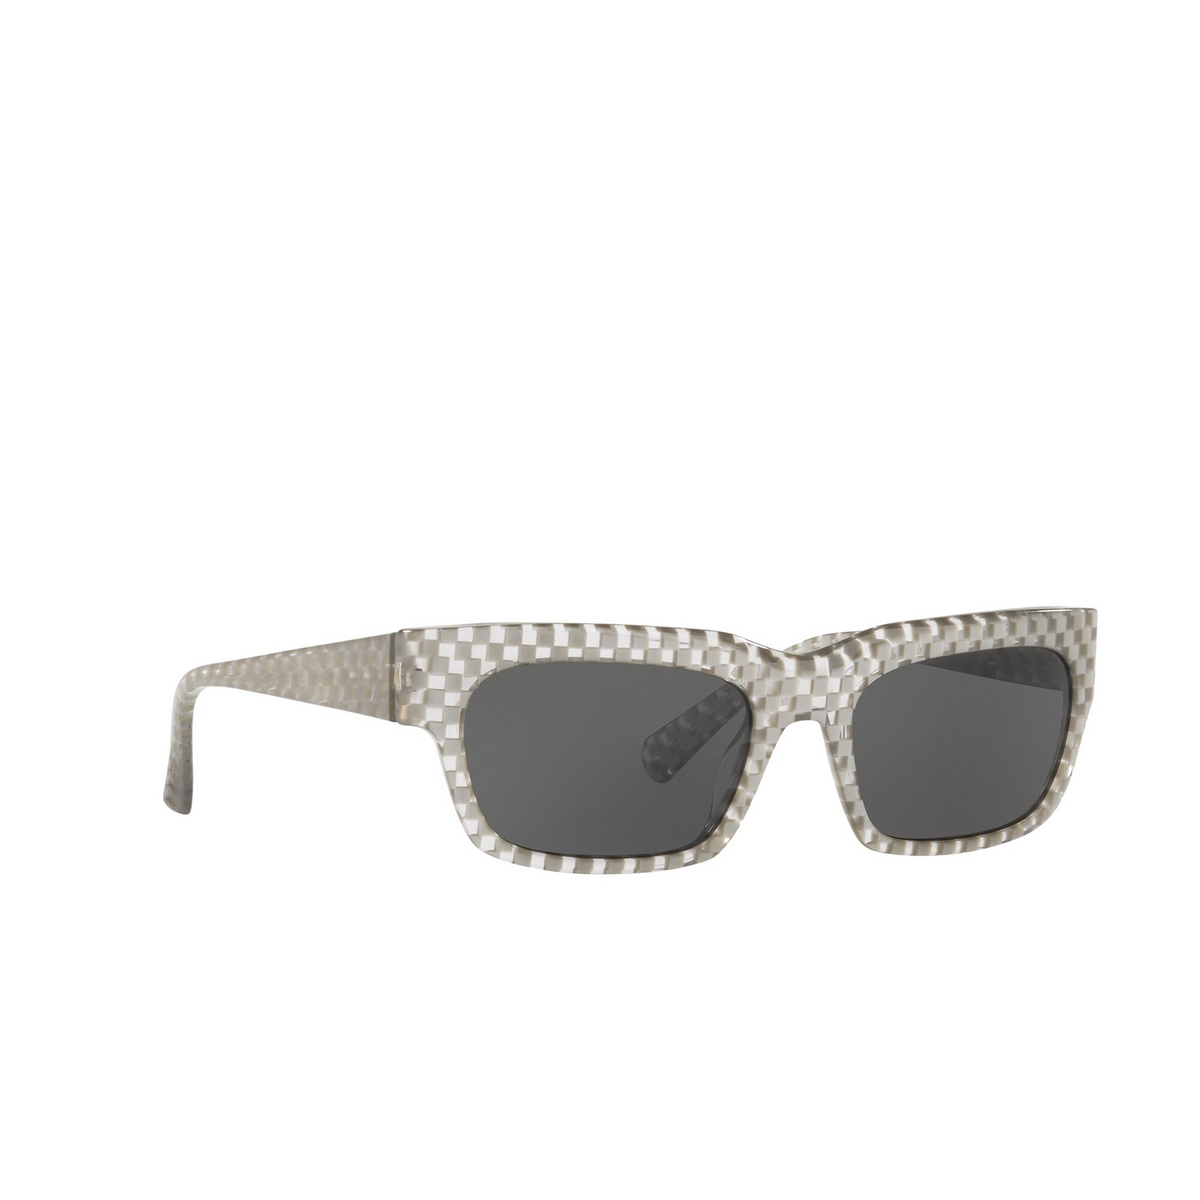 Alain Mikli® Square Sunglasses: Orage A05042 color Silver Damier 002/73 - three-quarters view.